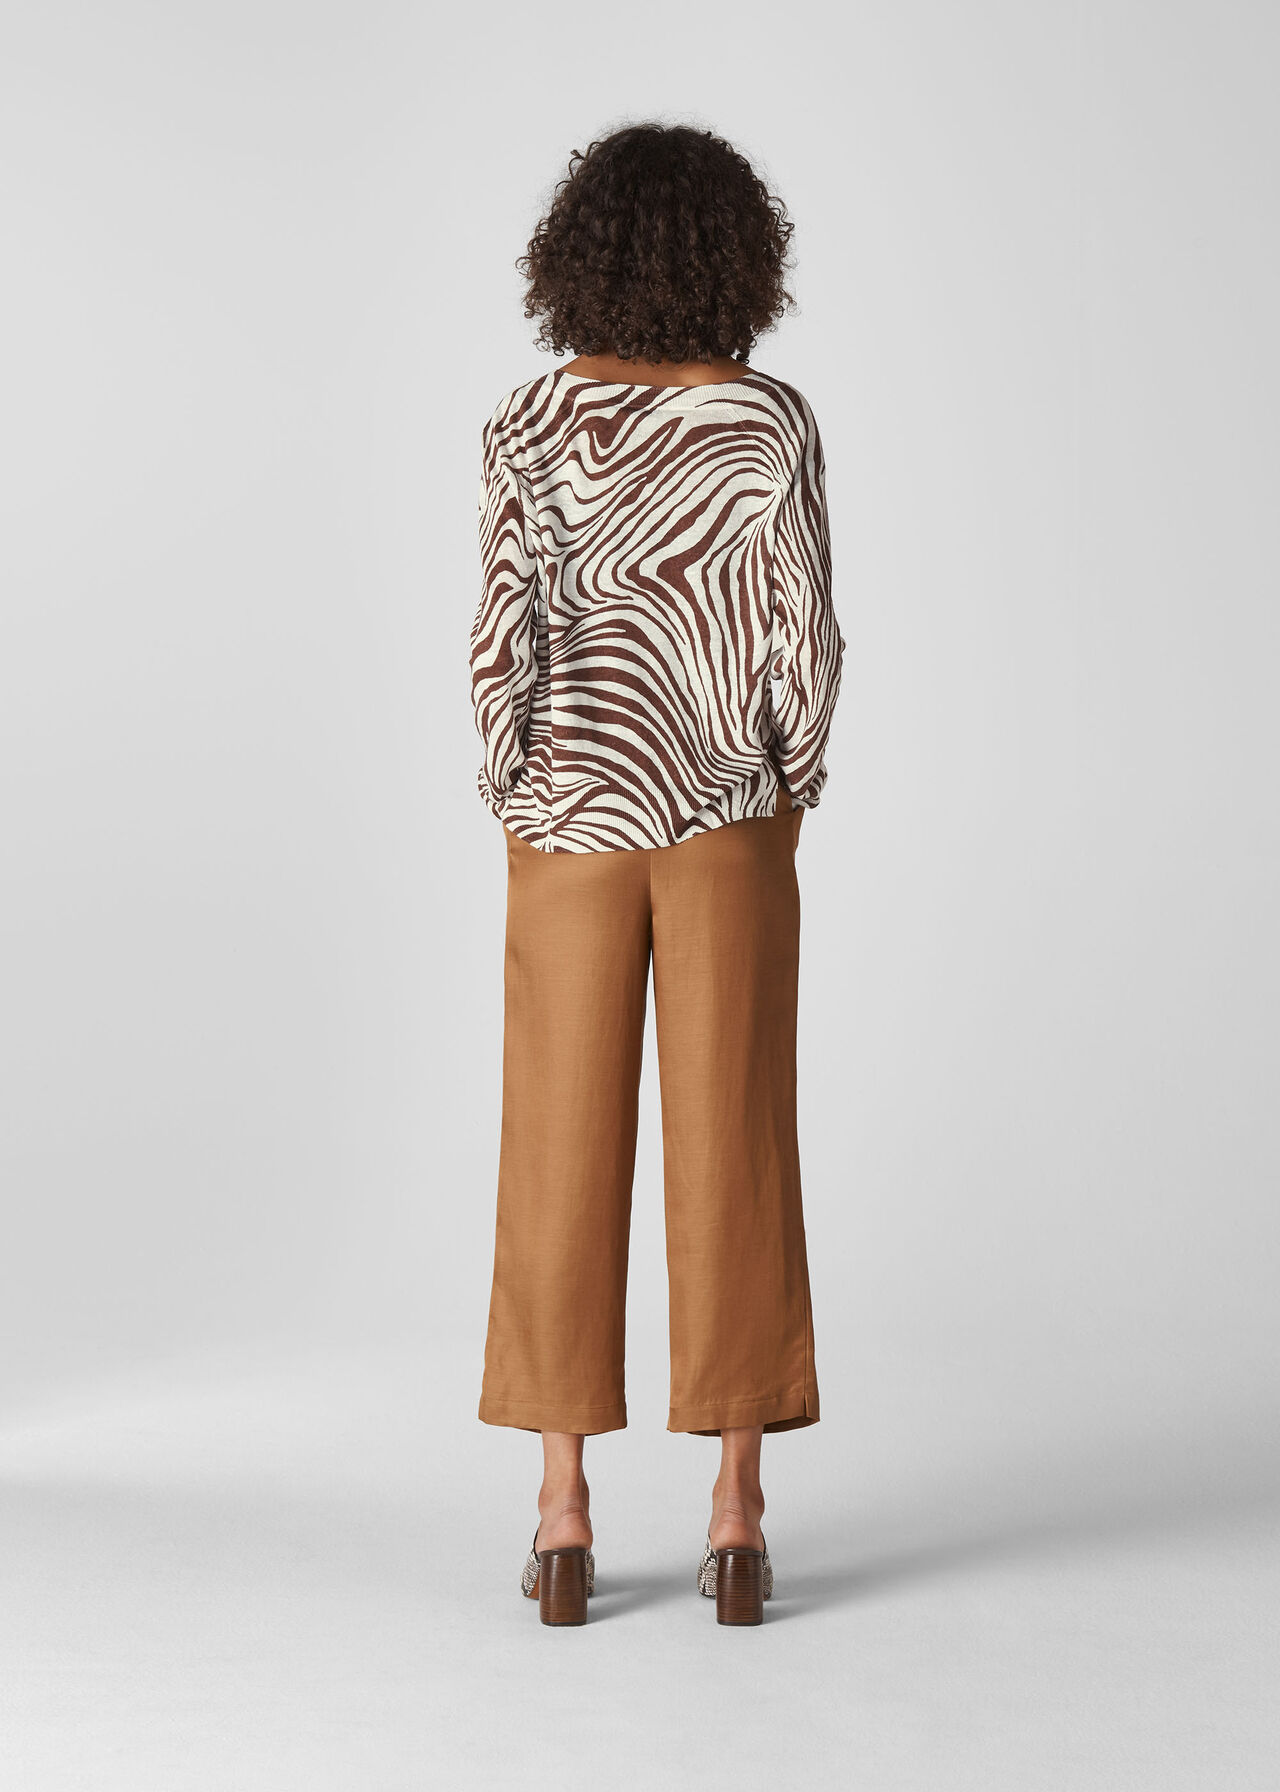 Graphic Zebra Print Linen Knit Brown/Multi